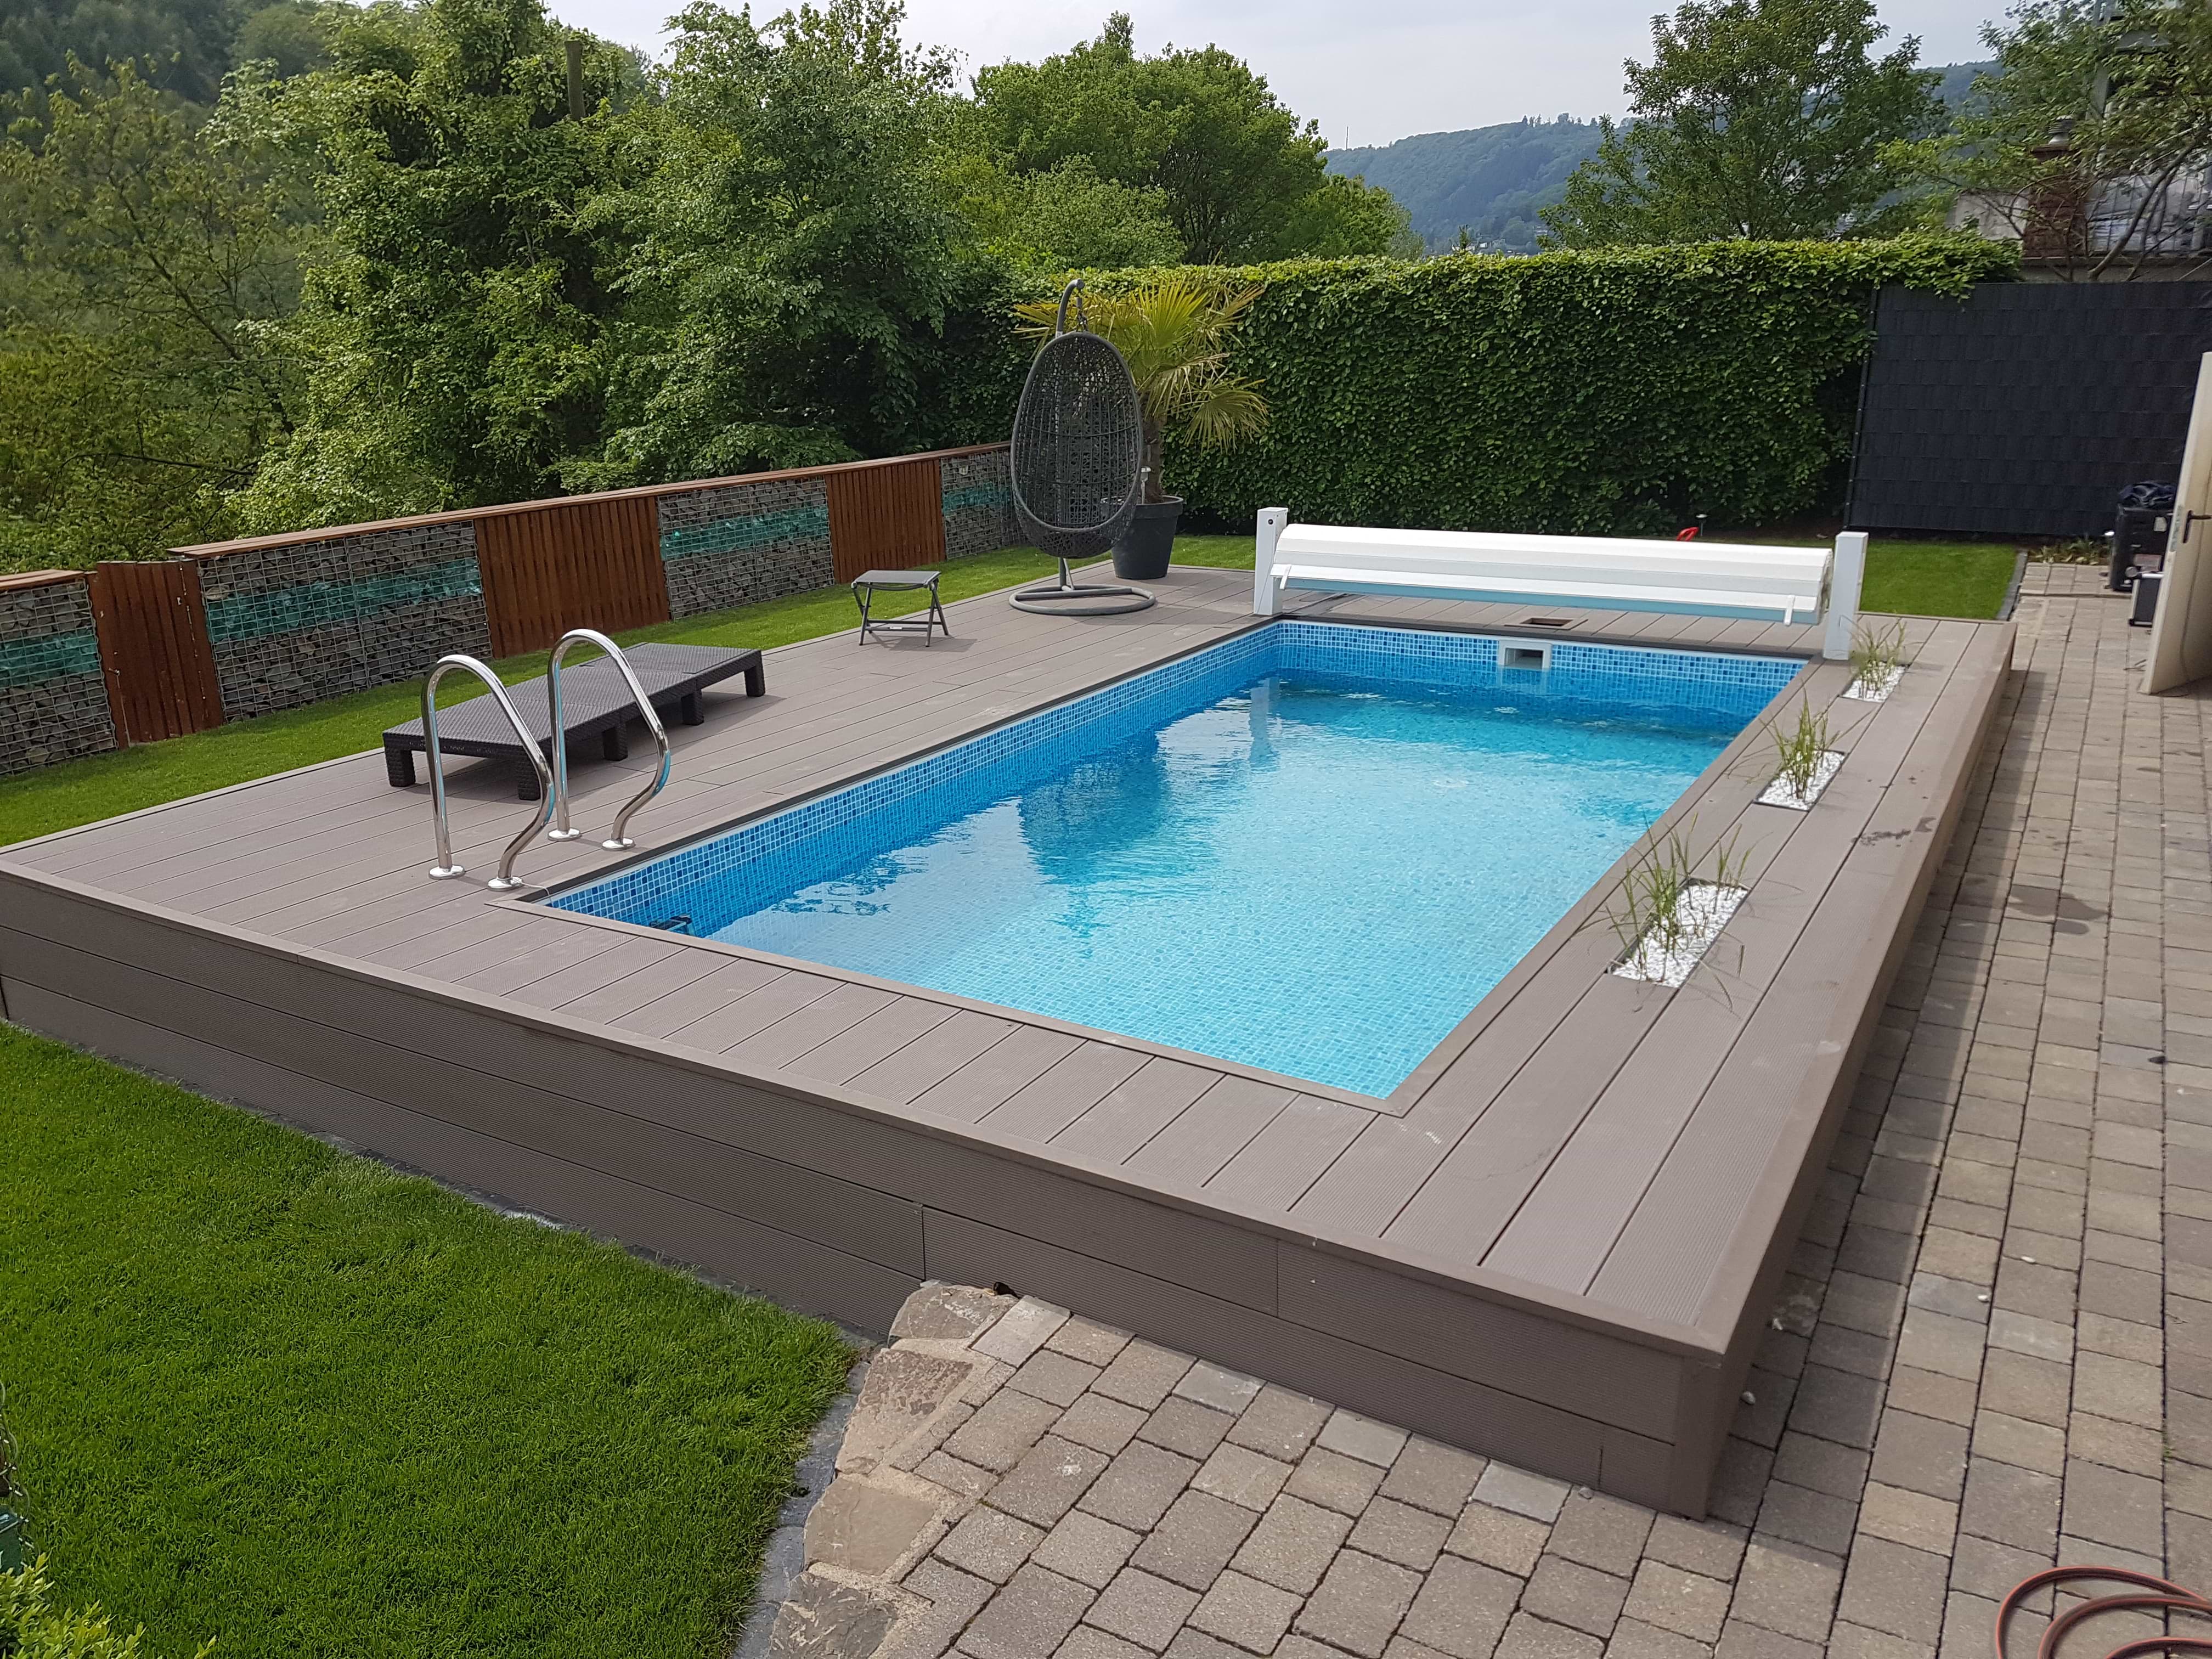 gartenpool-idealer swimming pool für den garten | Gartensaunablog.de